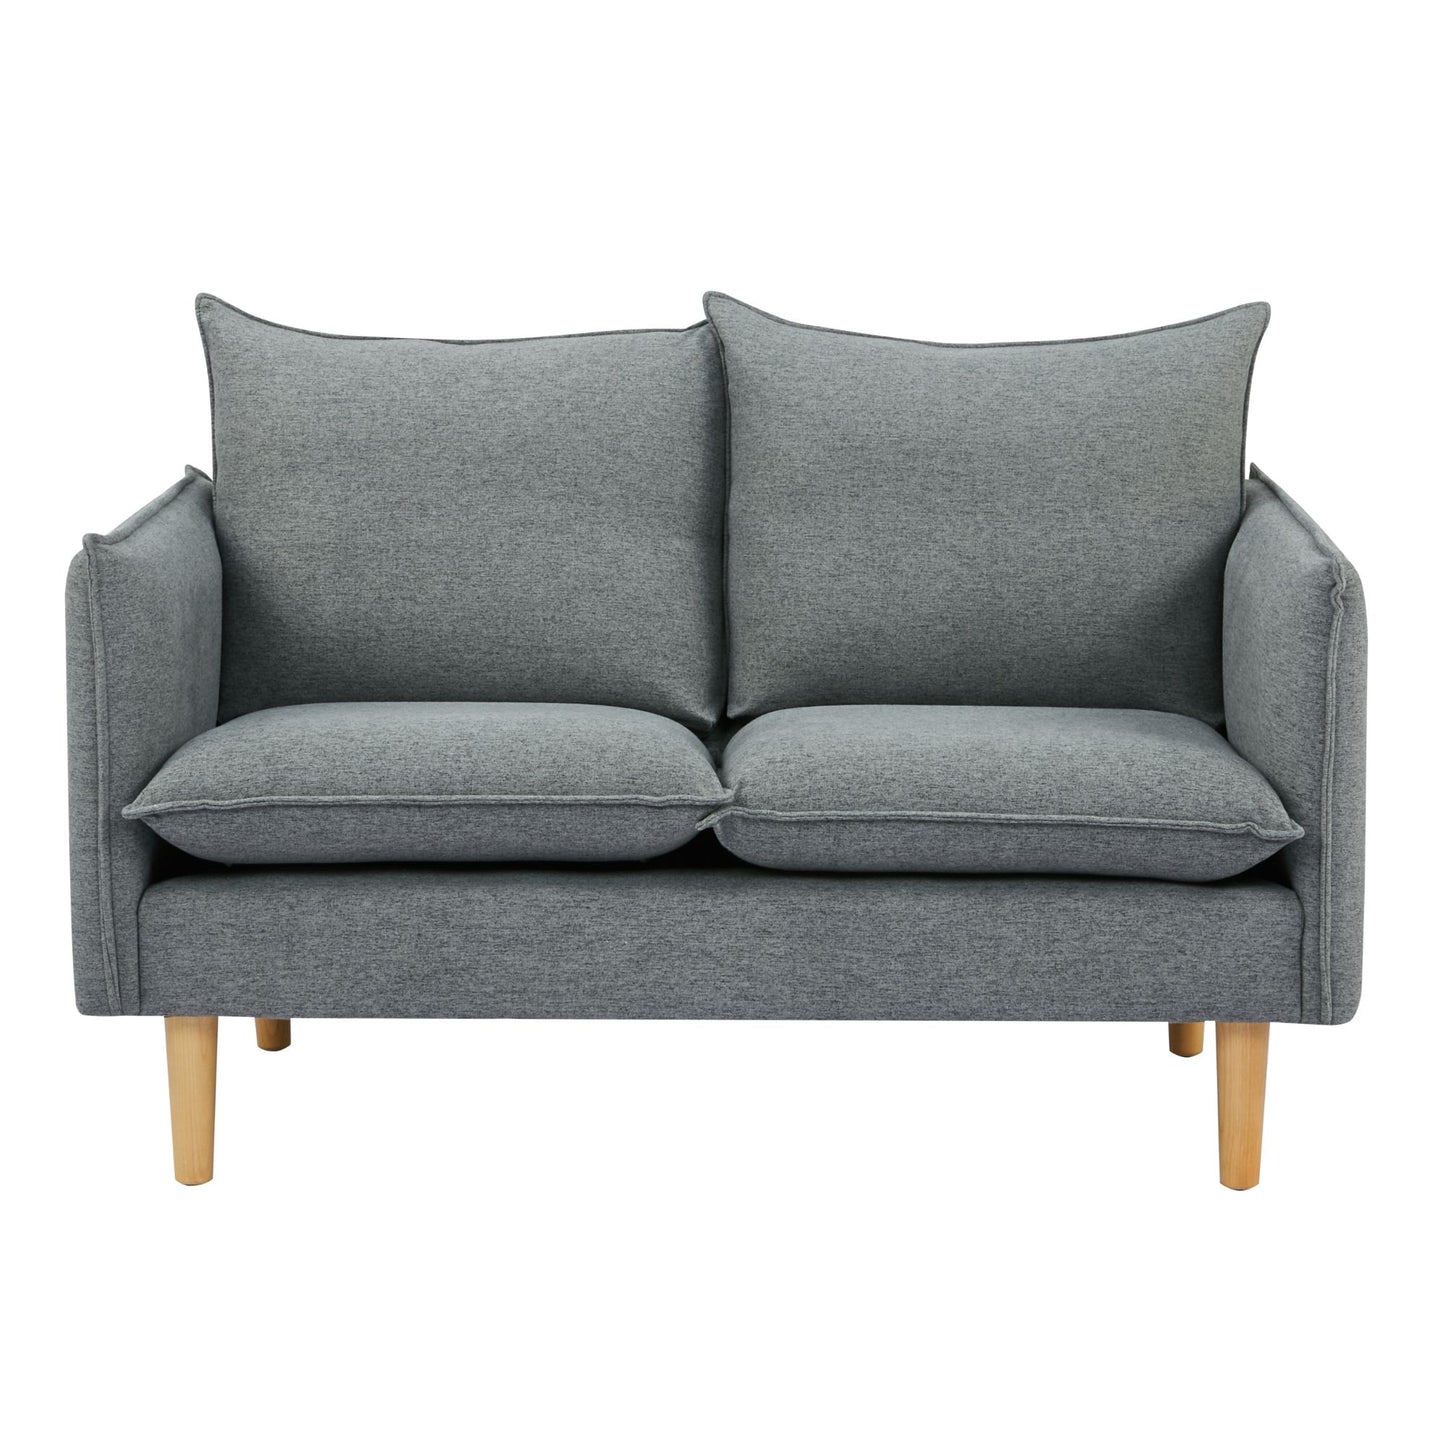 Sinatra 2 Seater Fabric Sofa Lounge Couch Dark Grey